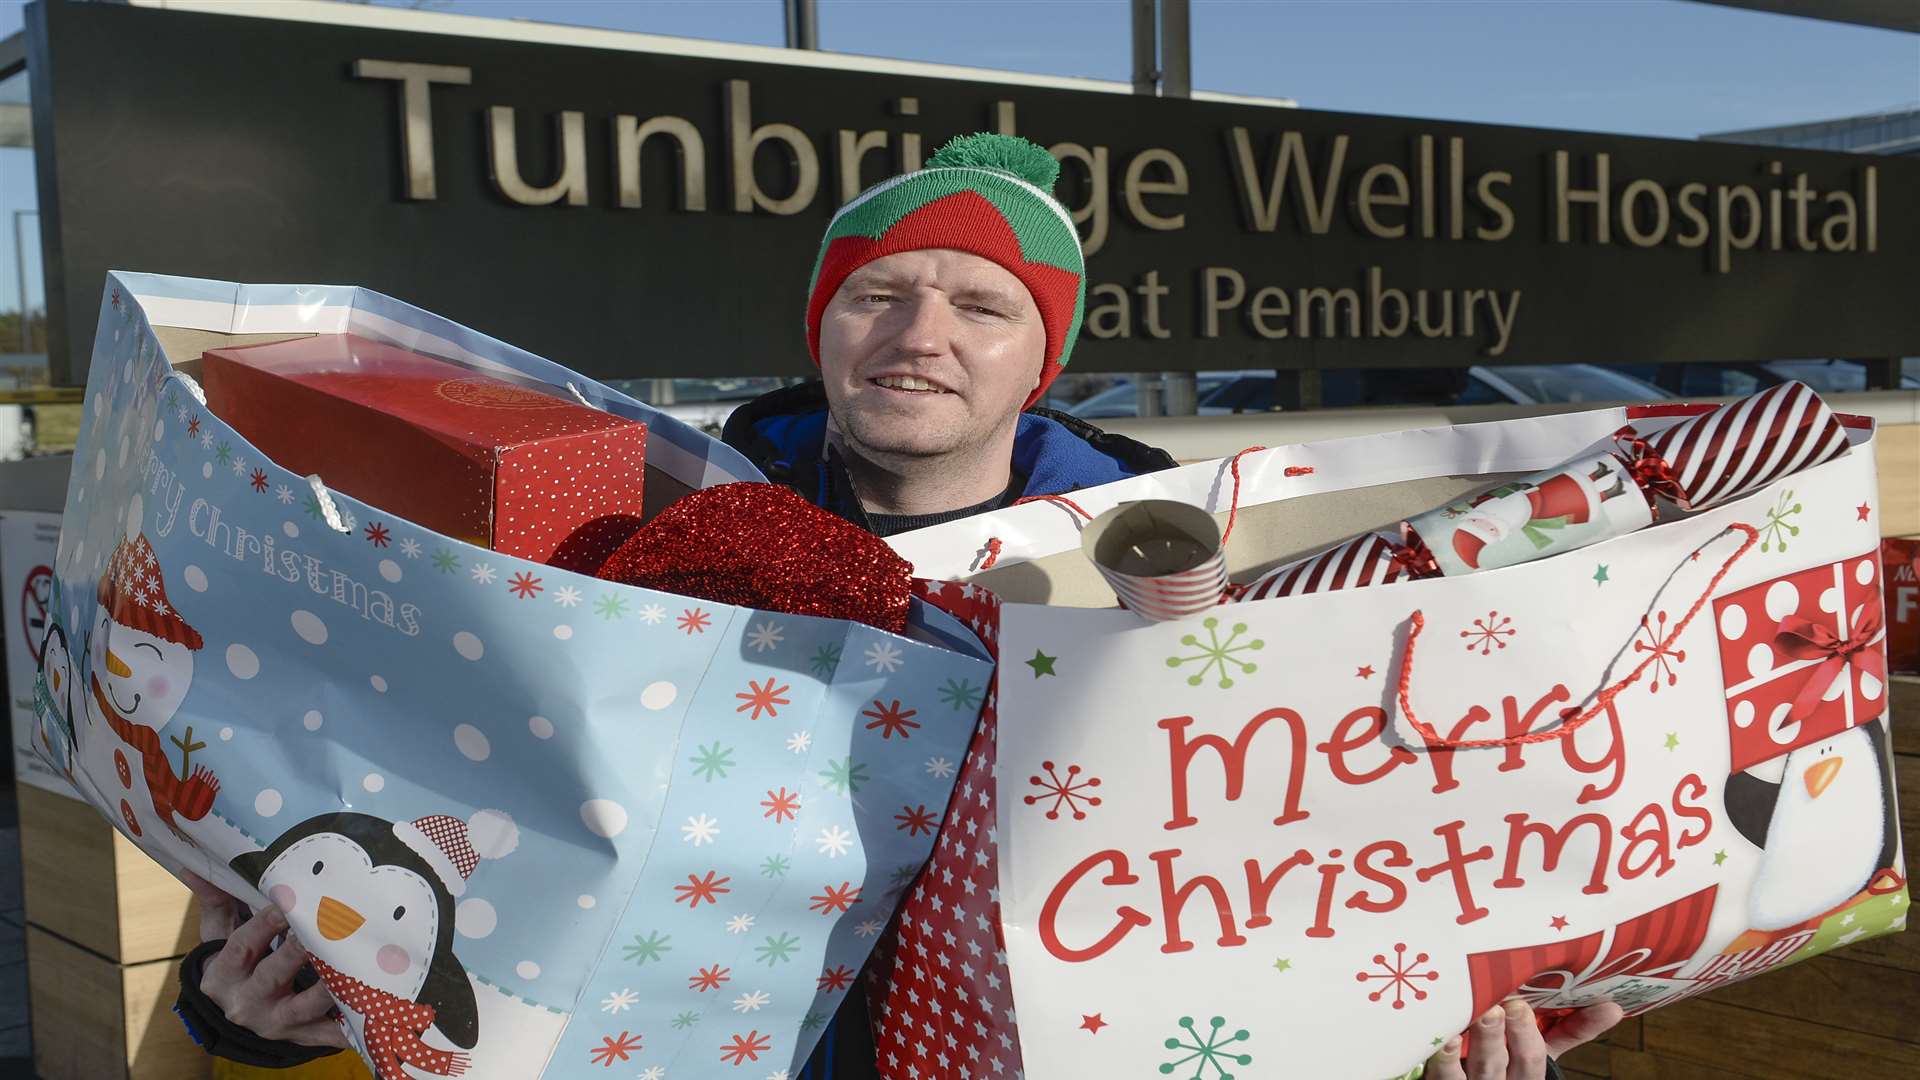 Adam Pryor brings supplies to Tunbridge Wells Hospital